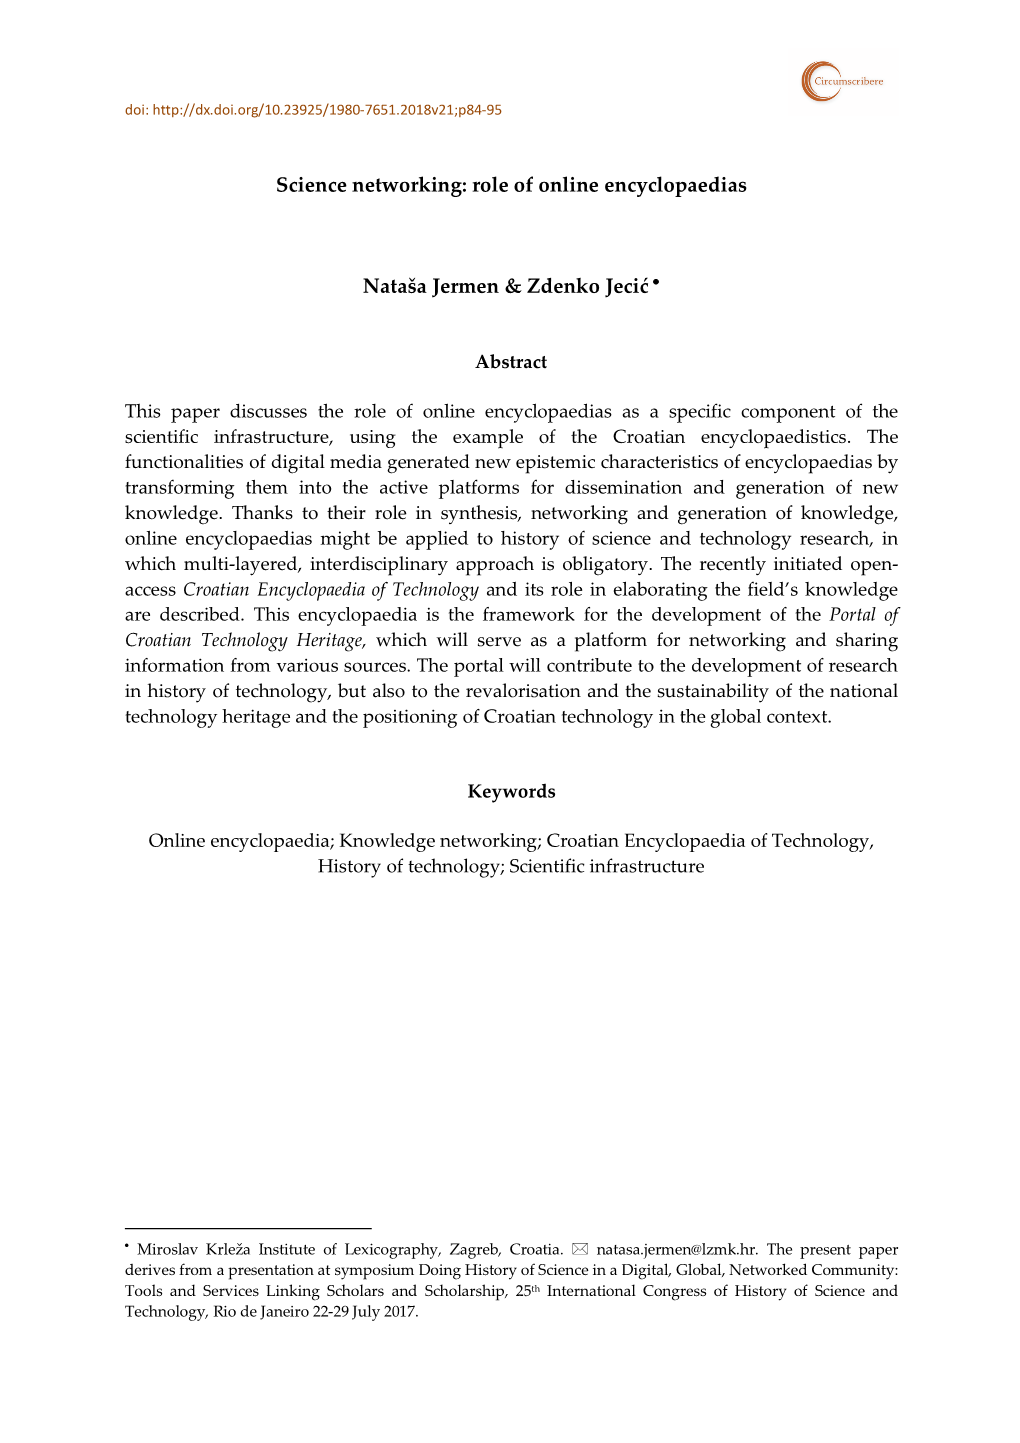 Science Networking: Role of Online Encyclopaedias Nataša Jermen